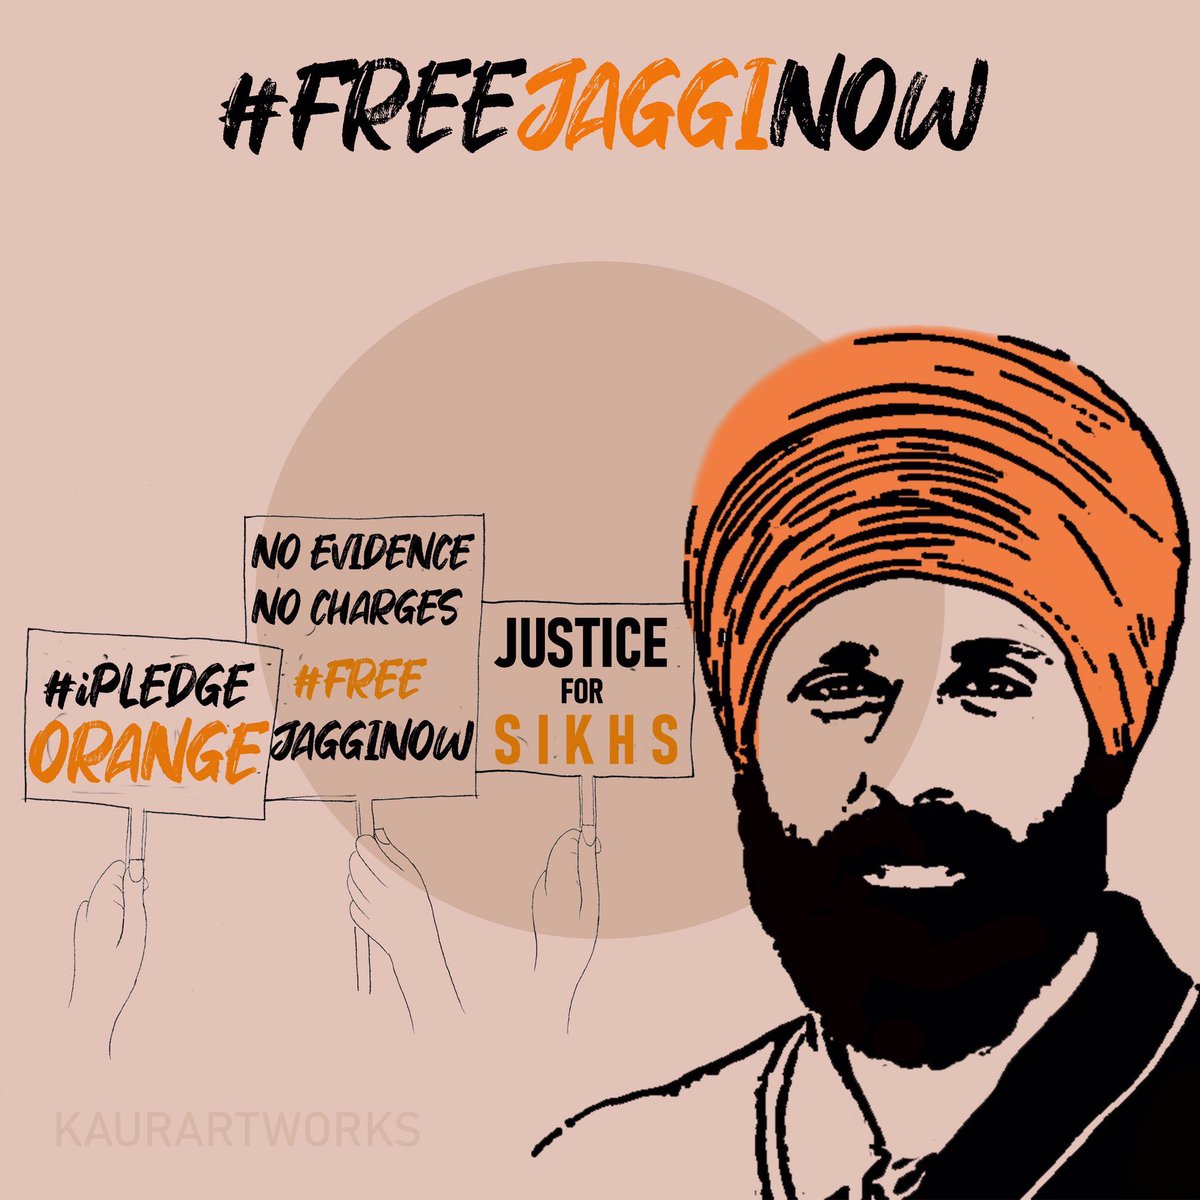 Free Jaggi Now

#FreeJaggiNow 
#JusticeForSikhs